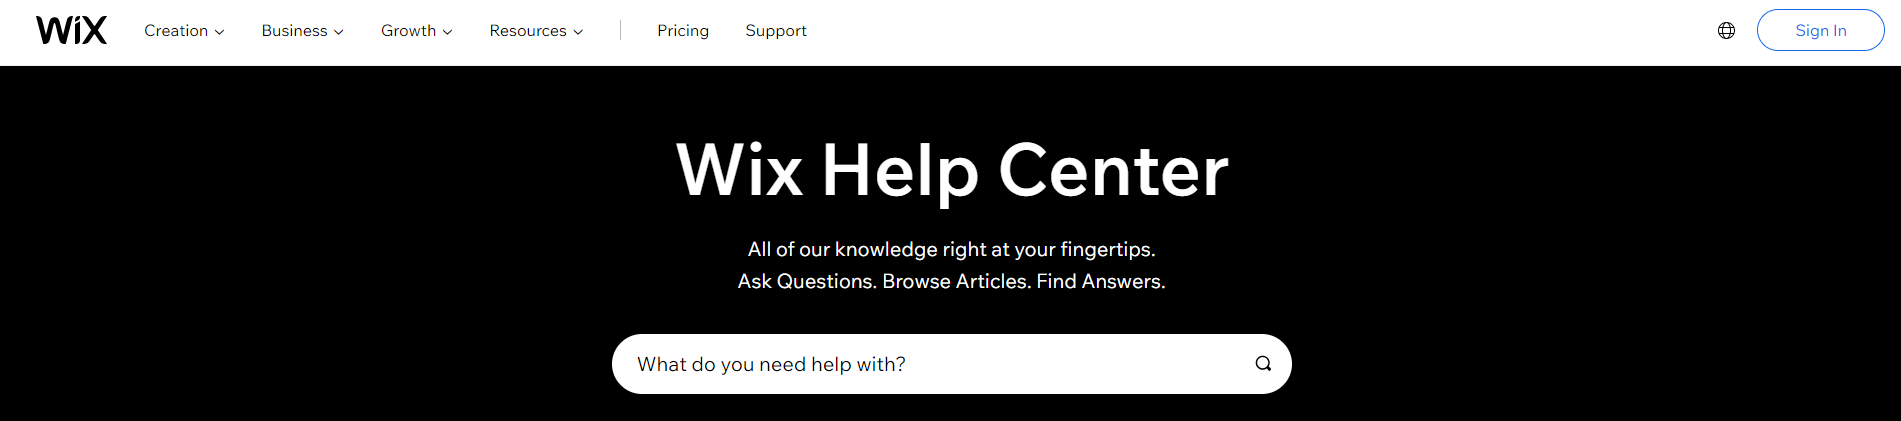 Wix Help Center - Webflow vs Wix